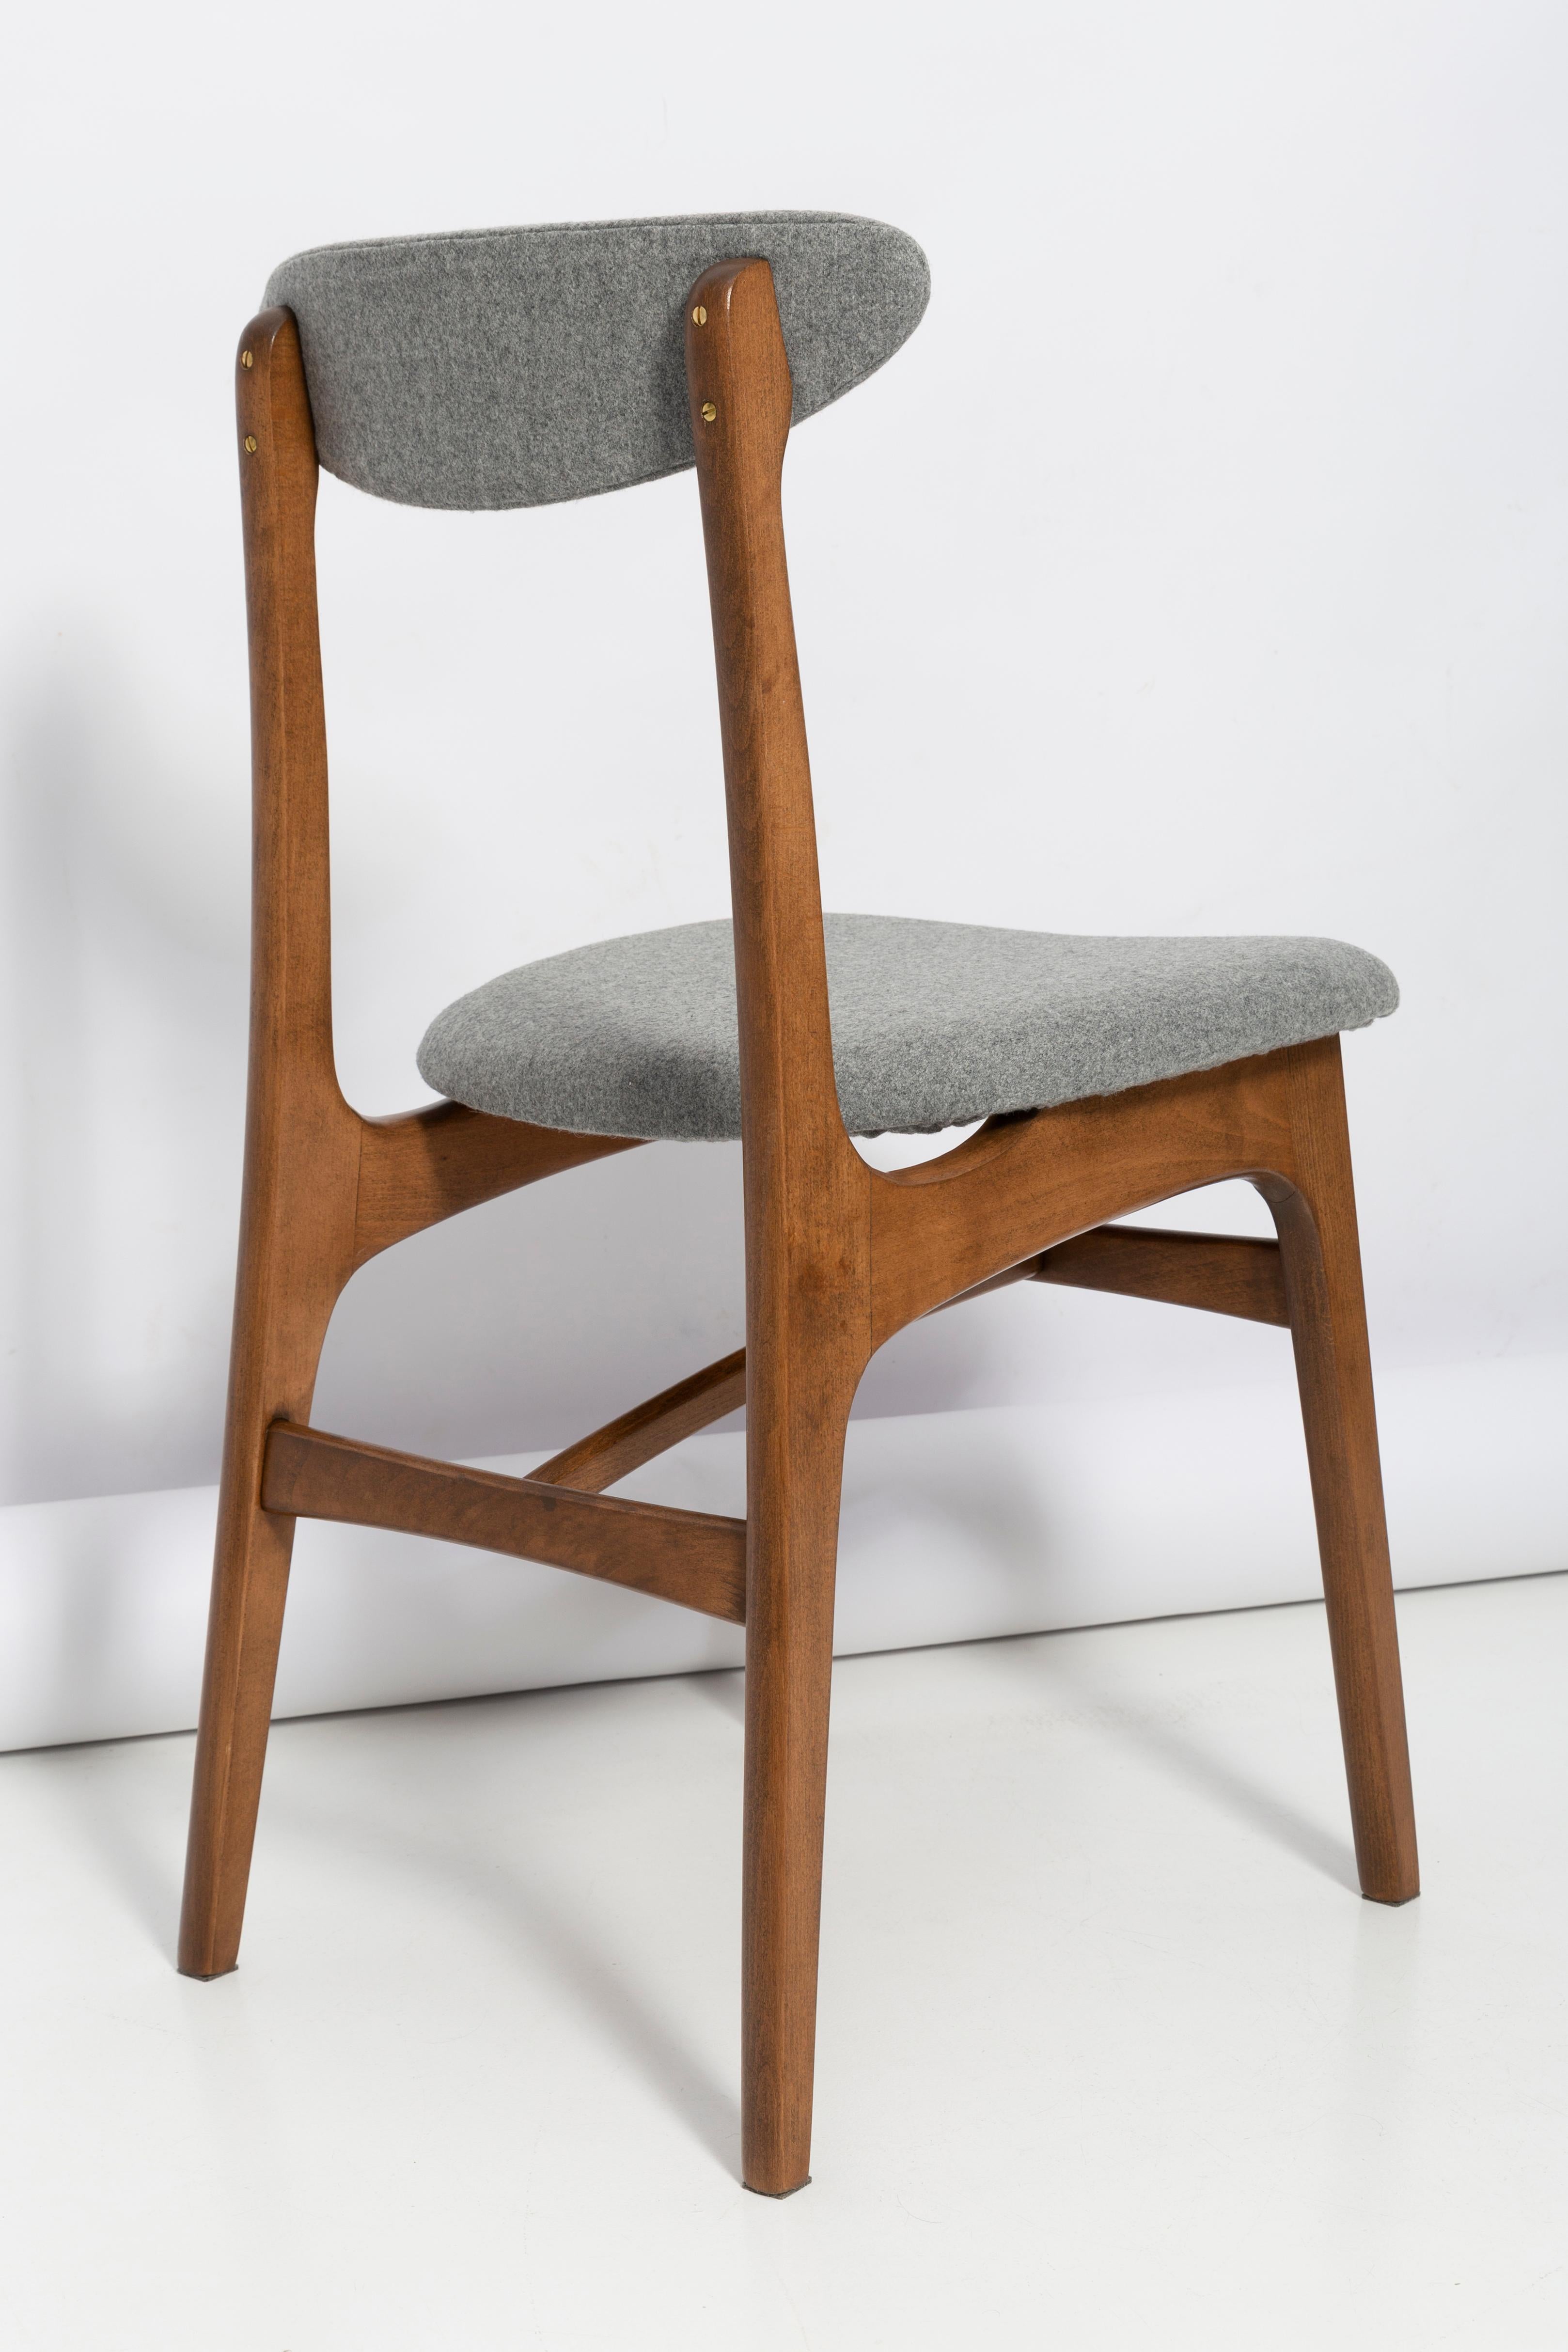 20th Century Mid Century Gray Wool Chair Designed by Rajmund Halas, Poland, 1960s For Sale